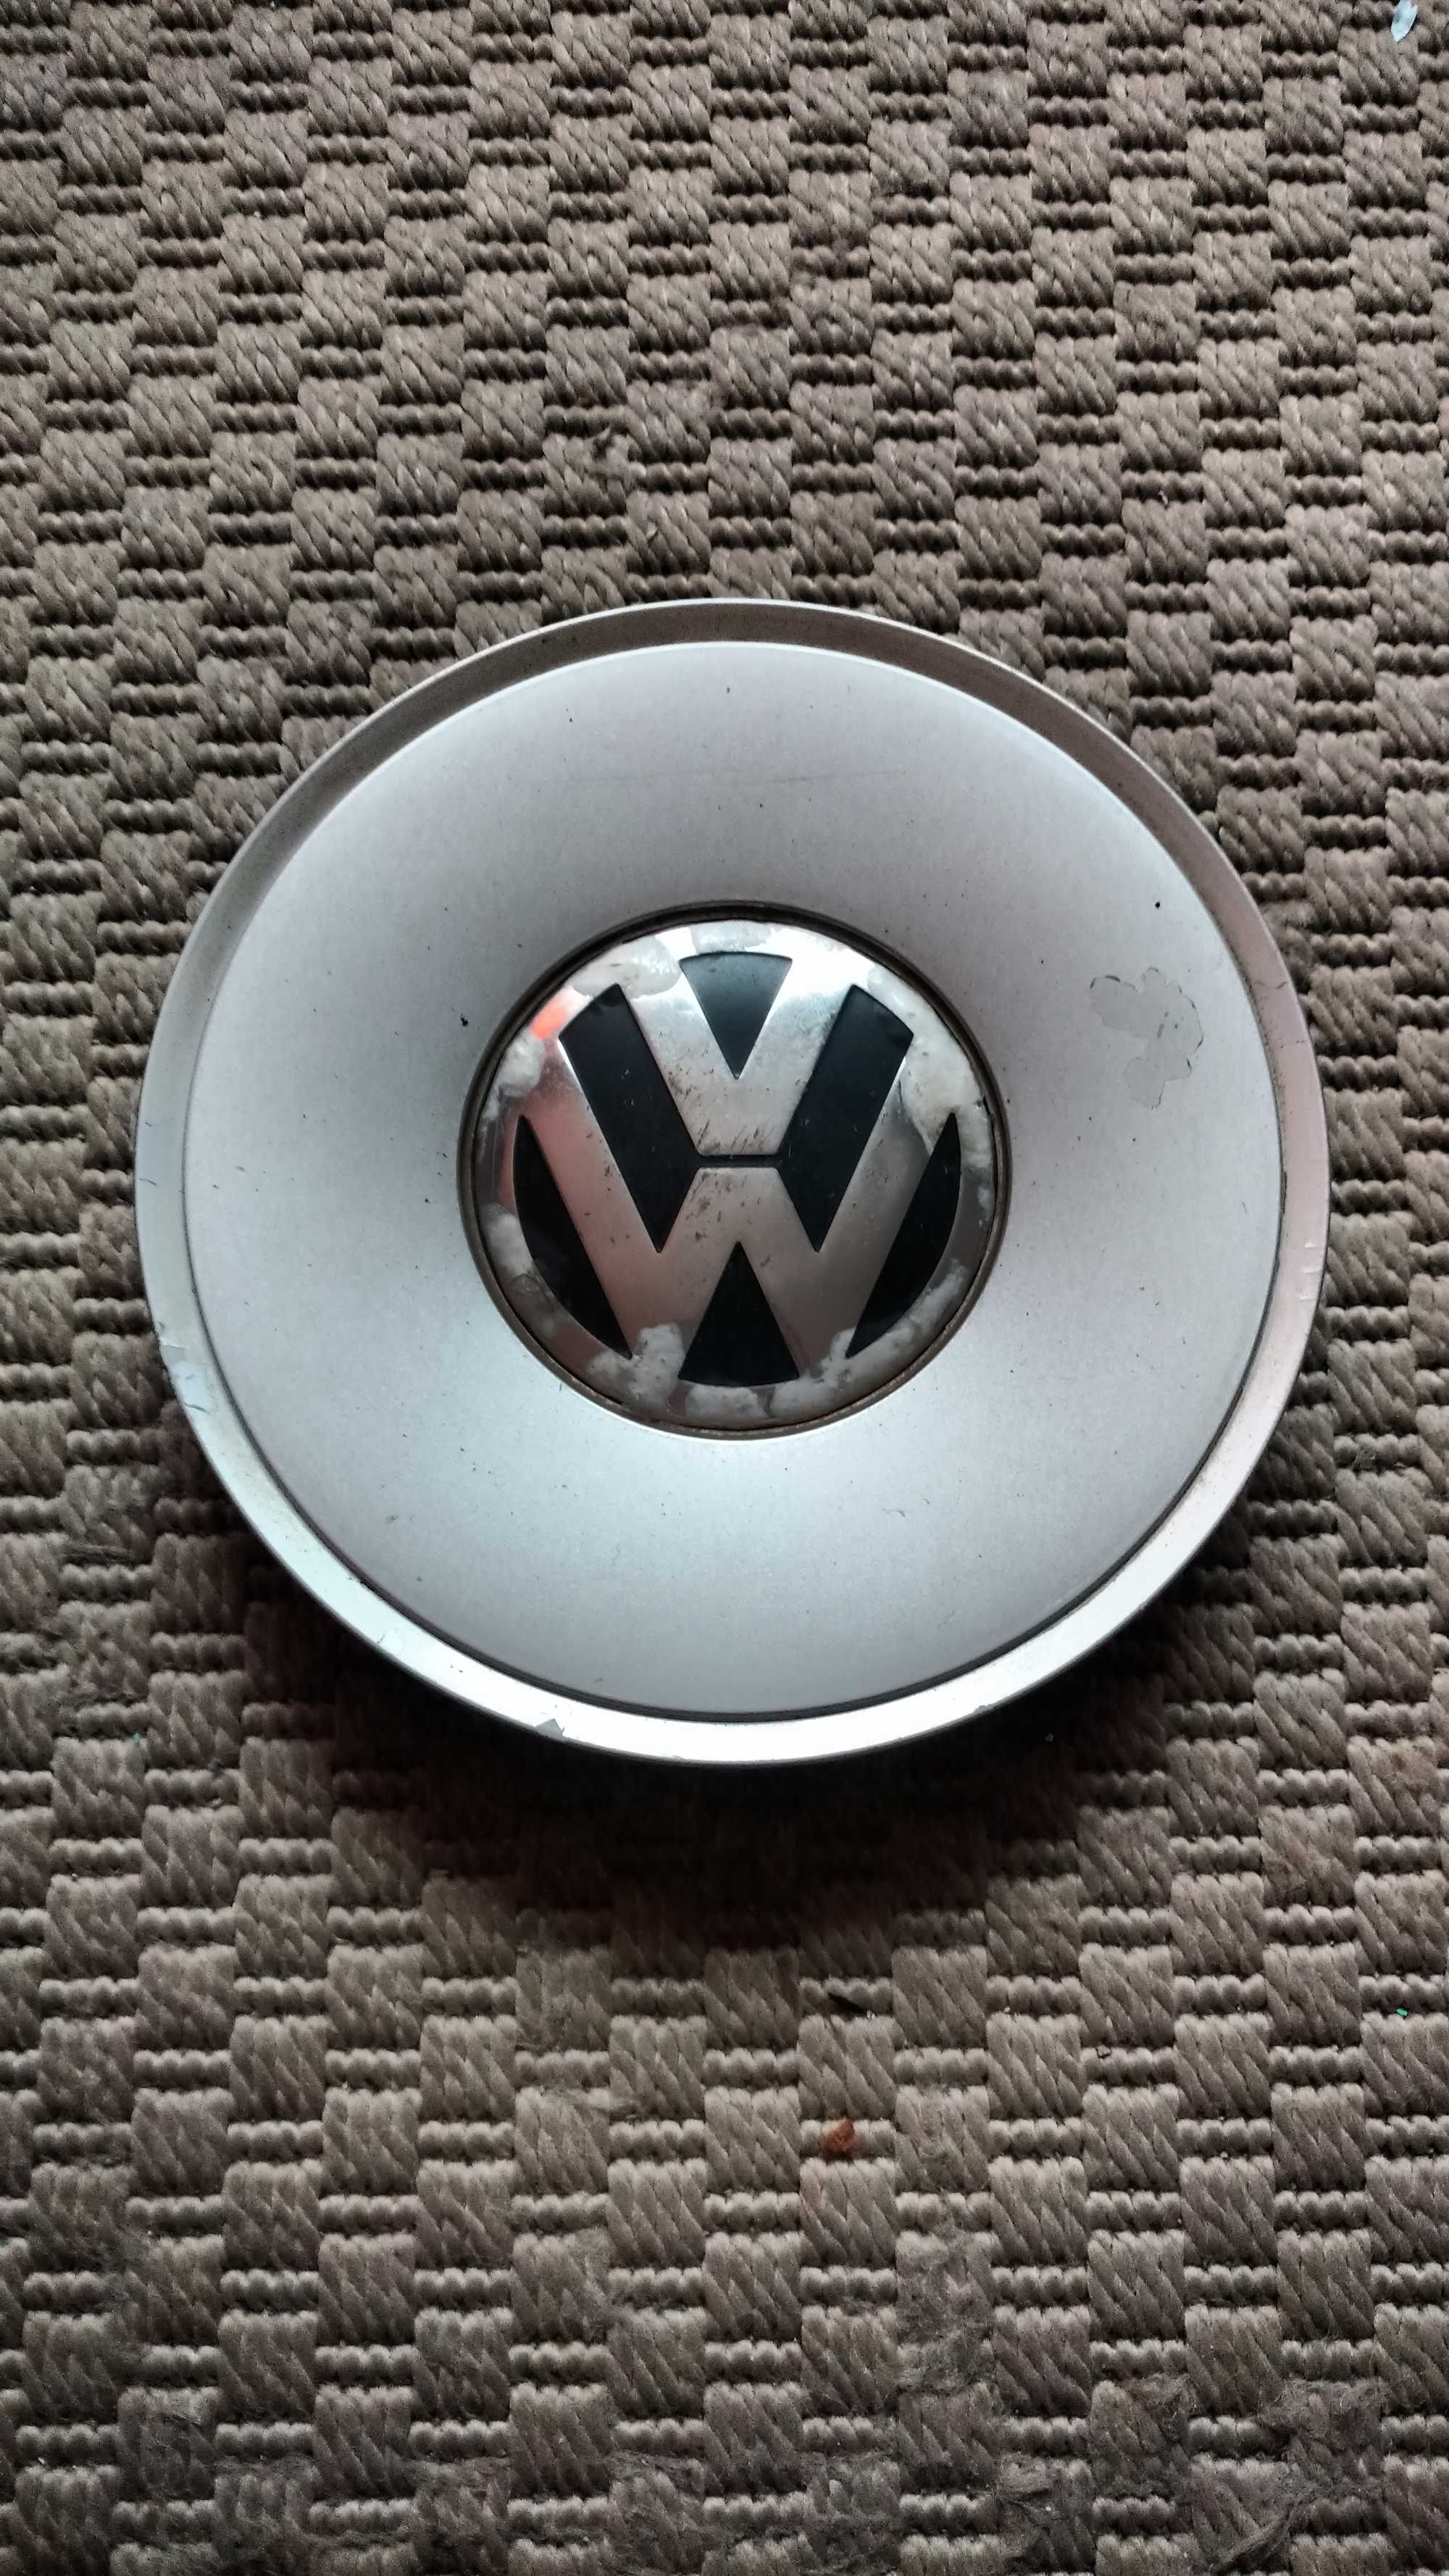 Dekielki alufelgi VW passat B5 oryginał 3B0.601.149 cena za komplet